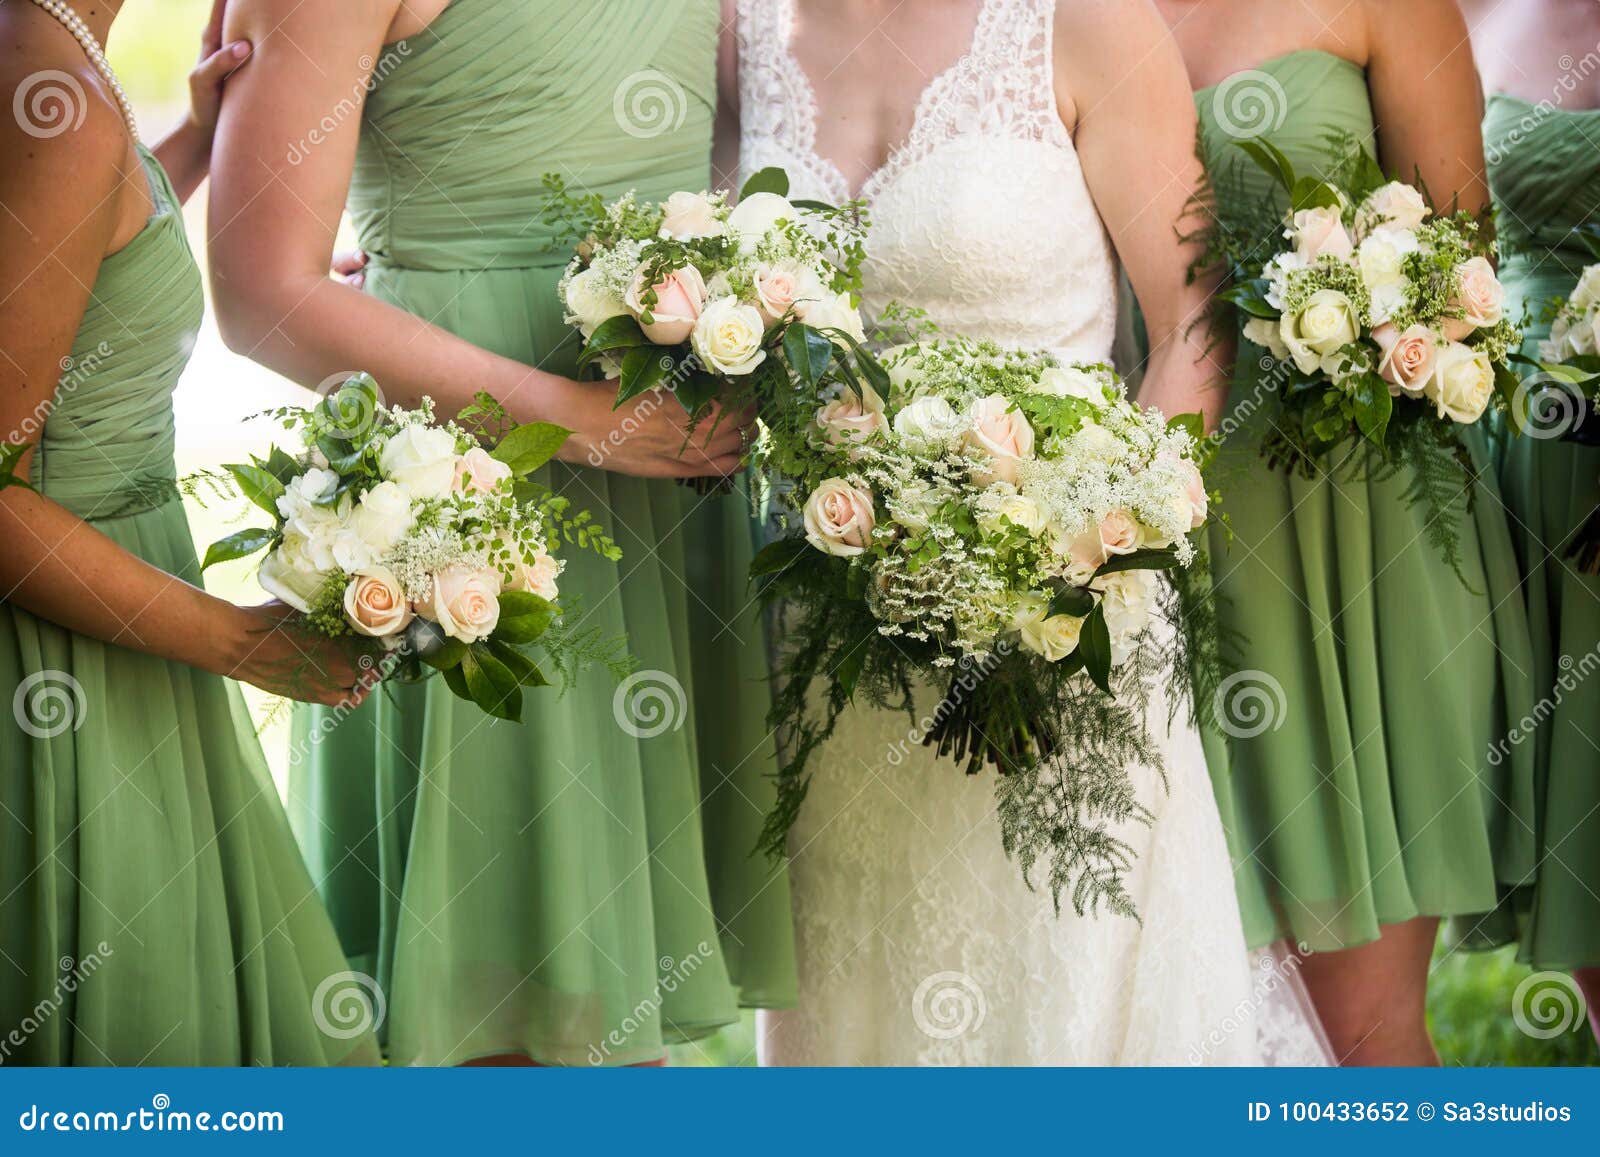 white rose bridesmaids